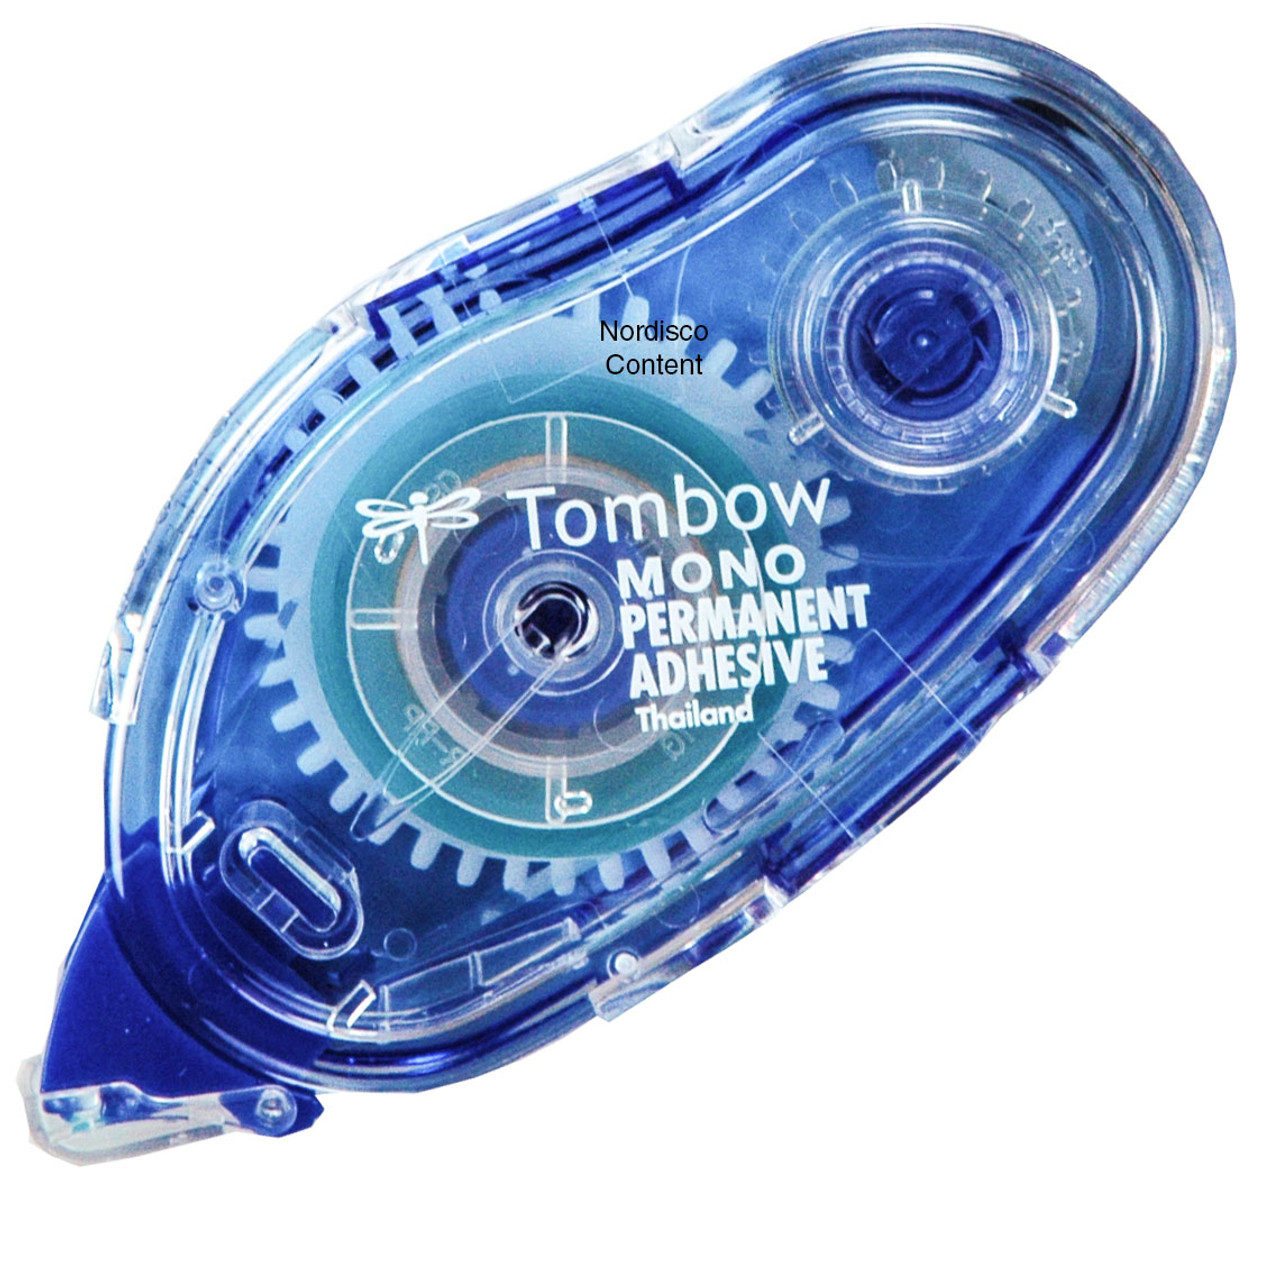 Tombow Mono Permanent Adhesive 62106, Tape Runner & Refill